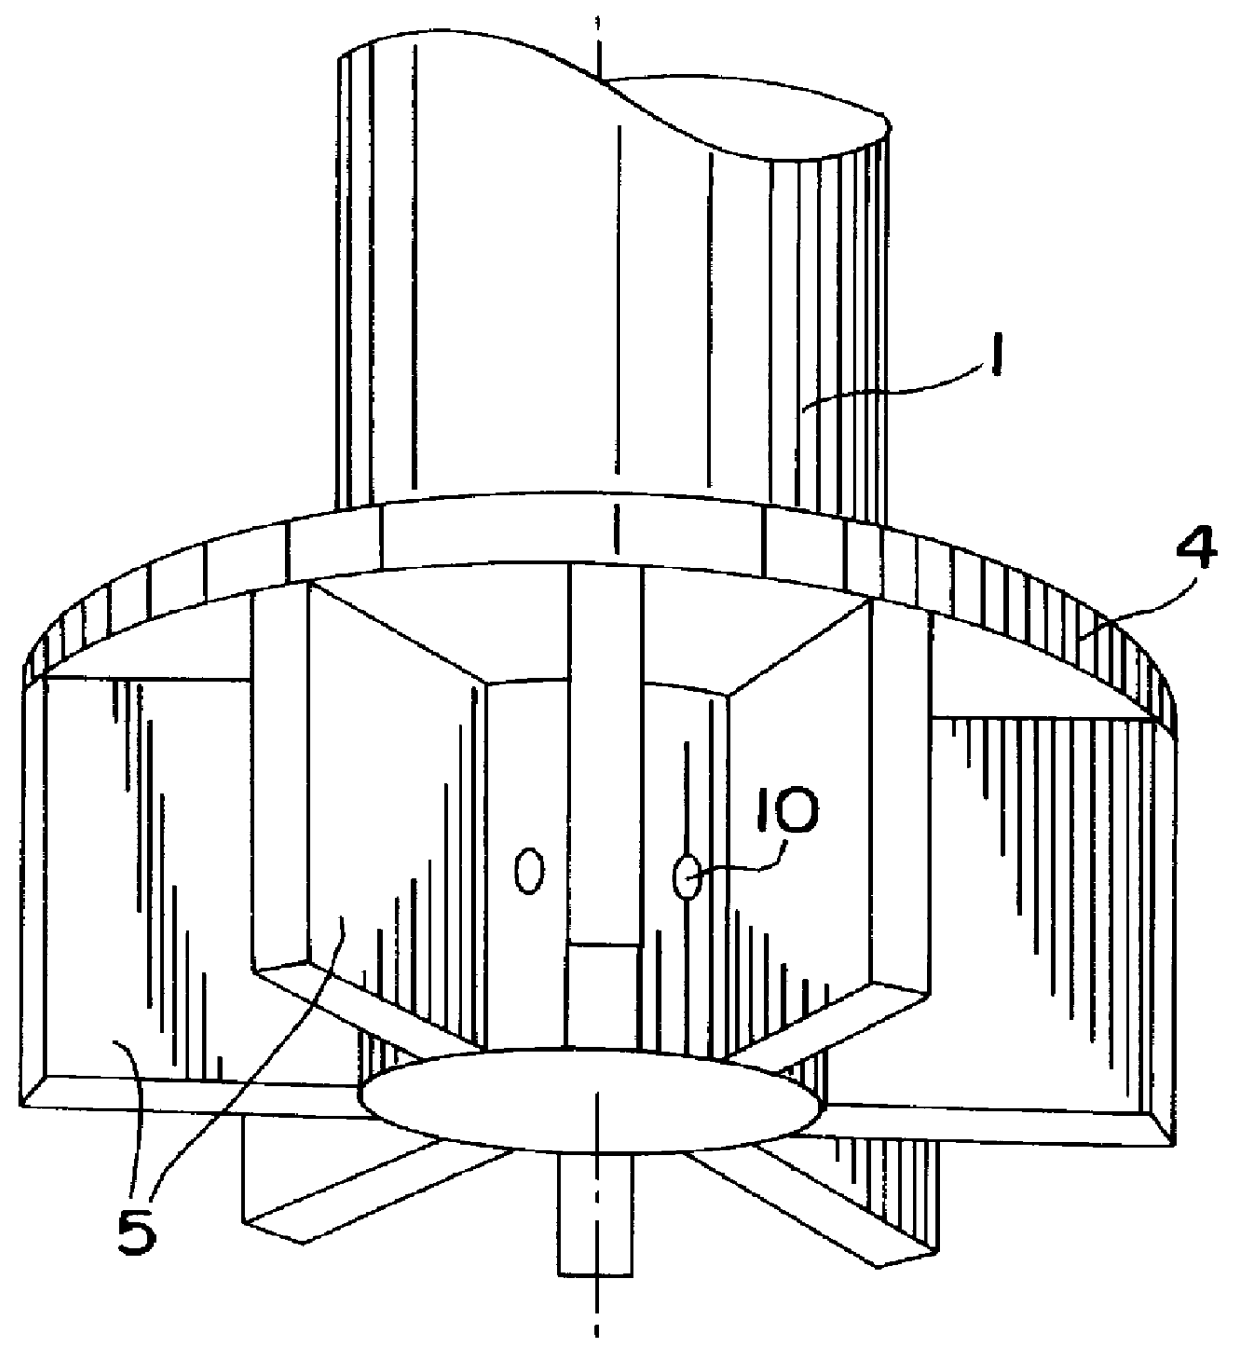 Rotary gas dispersion device for treating a liquid aluminium bath